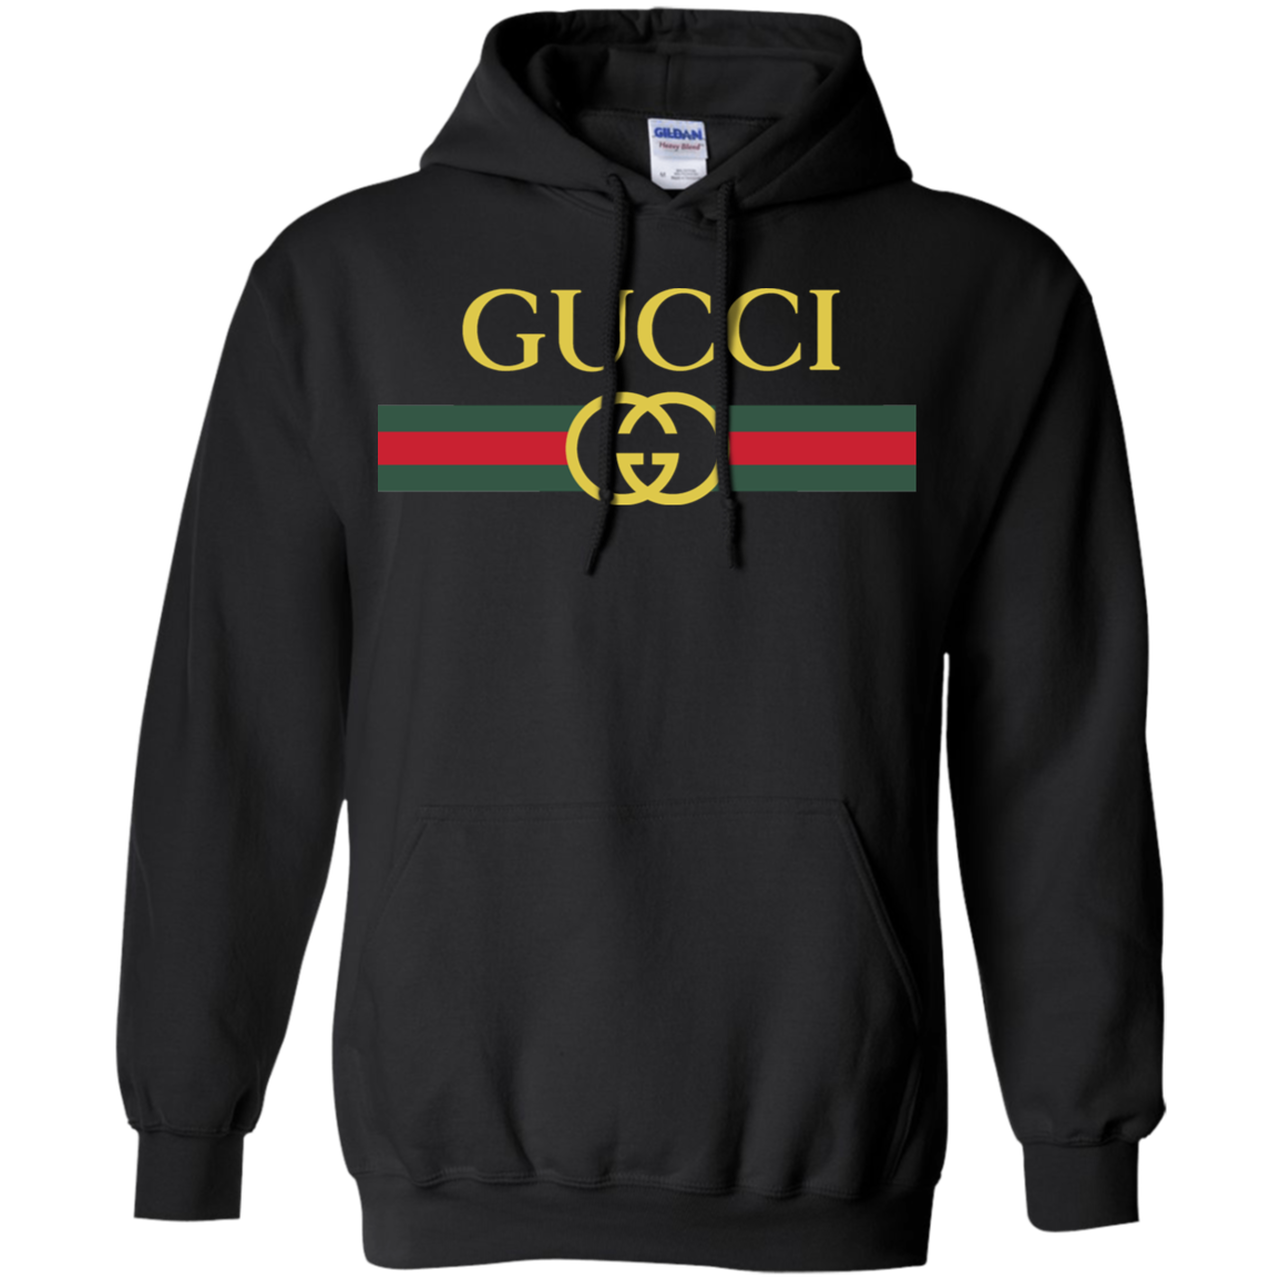 Gucci logo common sense t shirt G185 Gildan Pullover Hoodie 8 oz..